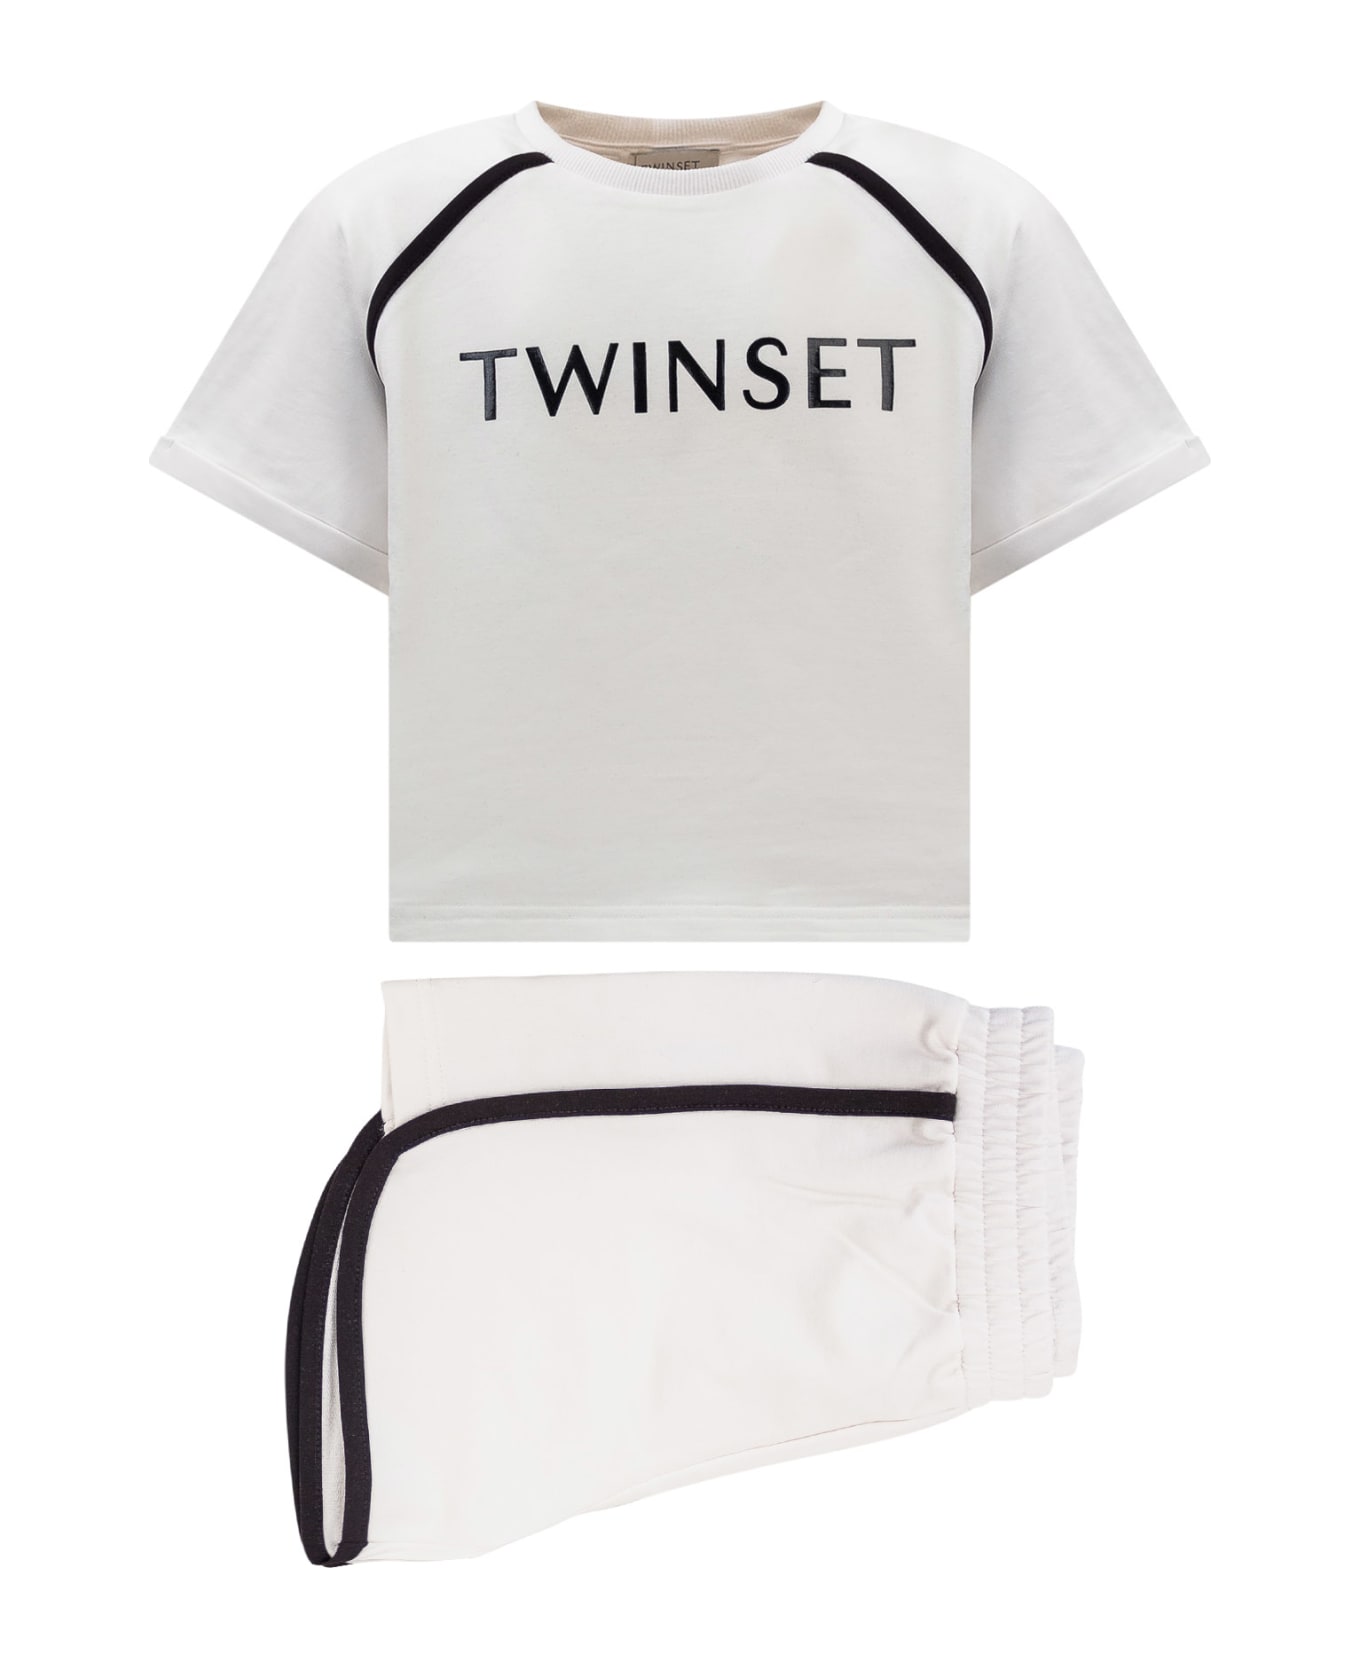 TwinSet T-shirt And Shorts Set - White ジャンプスーツ